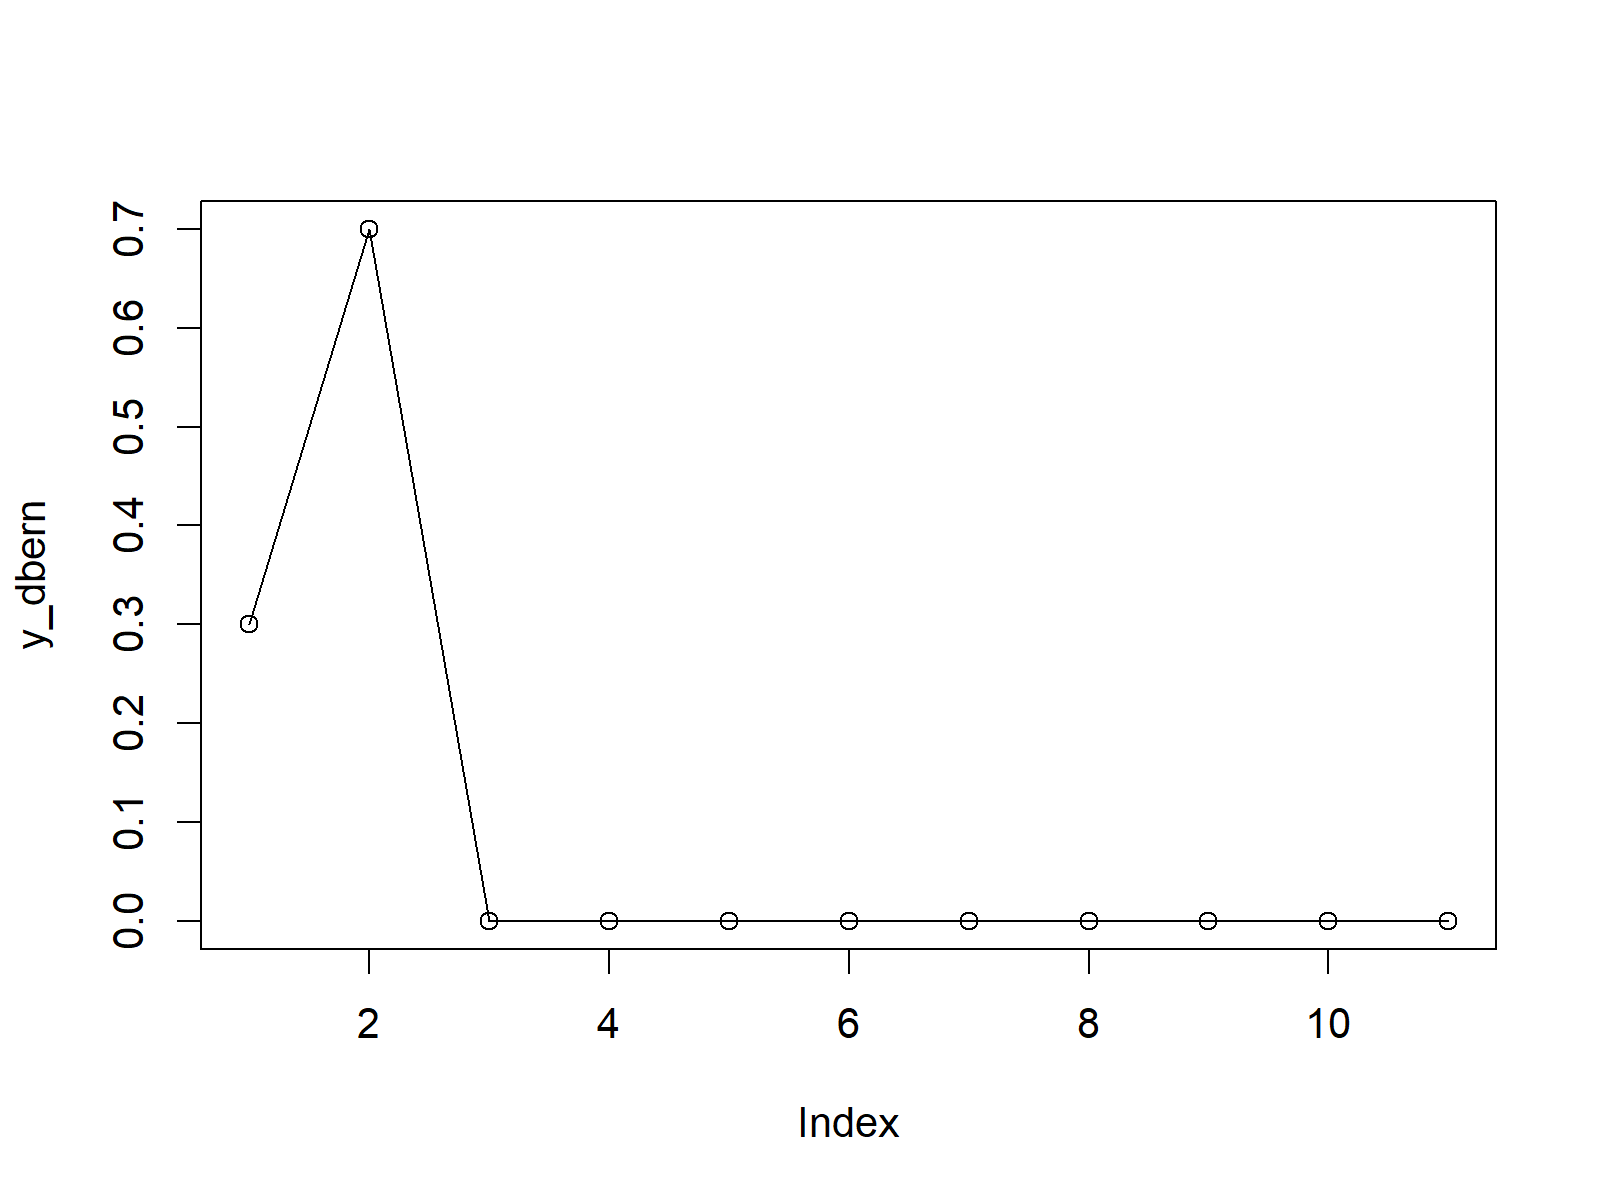 Bernoulli probability density function plot in R